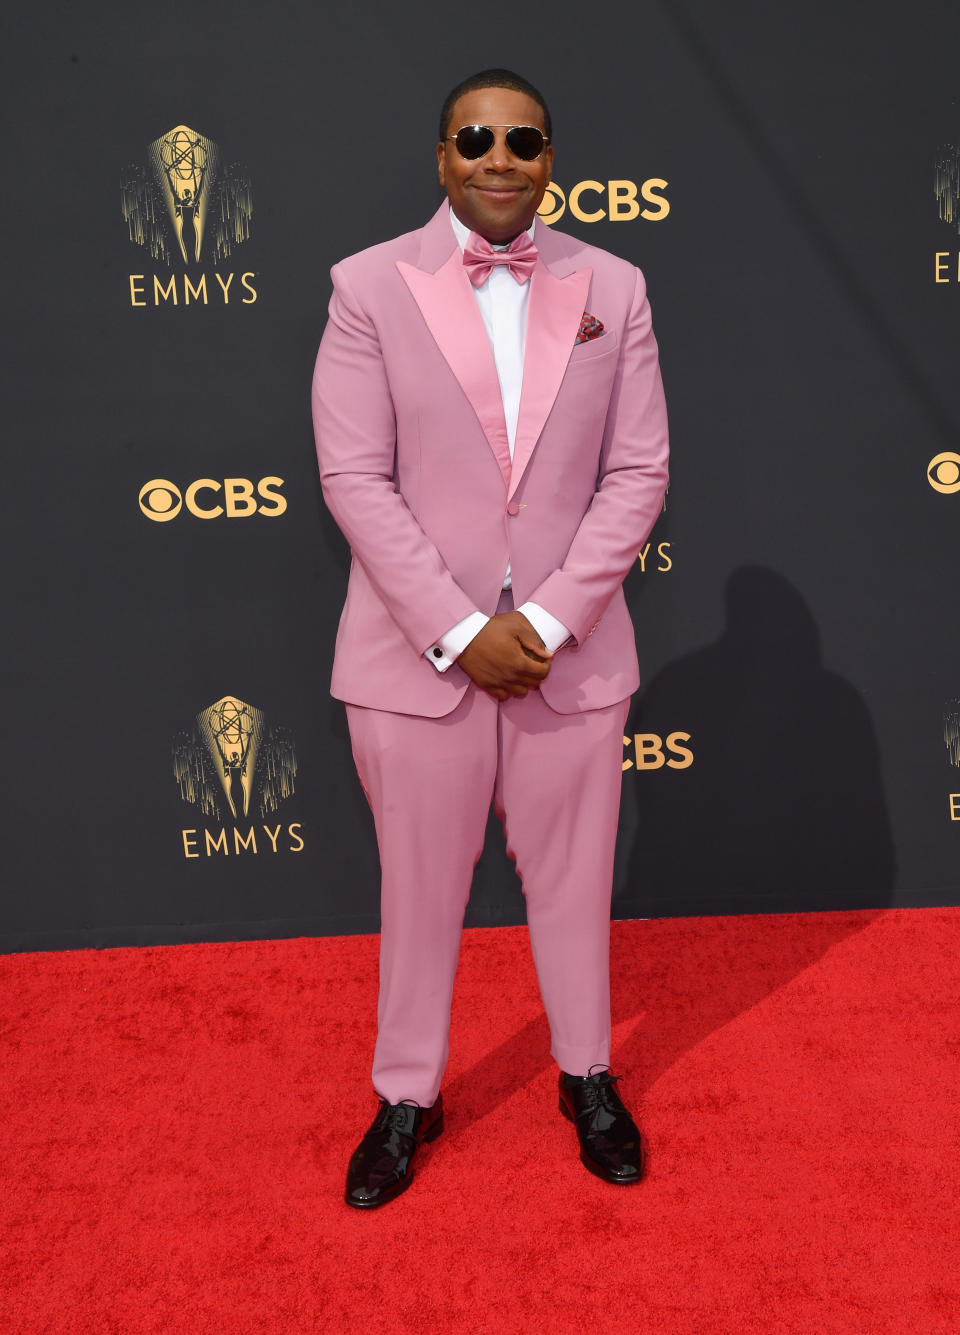 Kenan Thompson attends the 73rd Primetime Emmy Awards in Los Angeles on September 19, 2021. - Credit: Michael Buckner for Variety